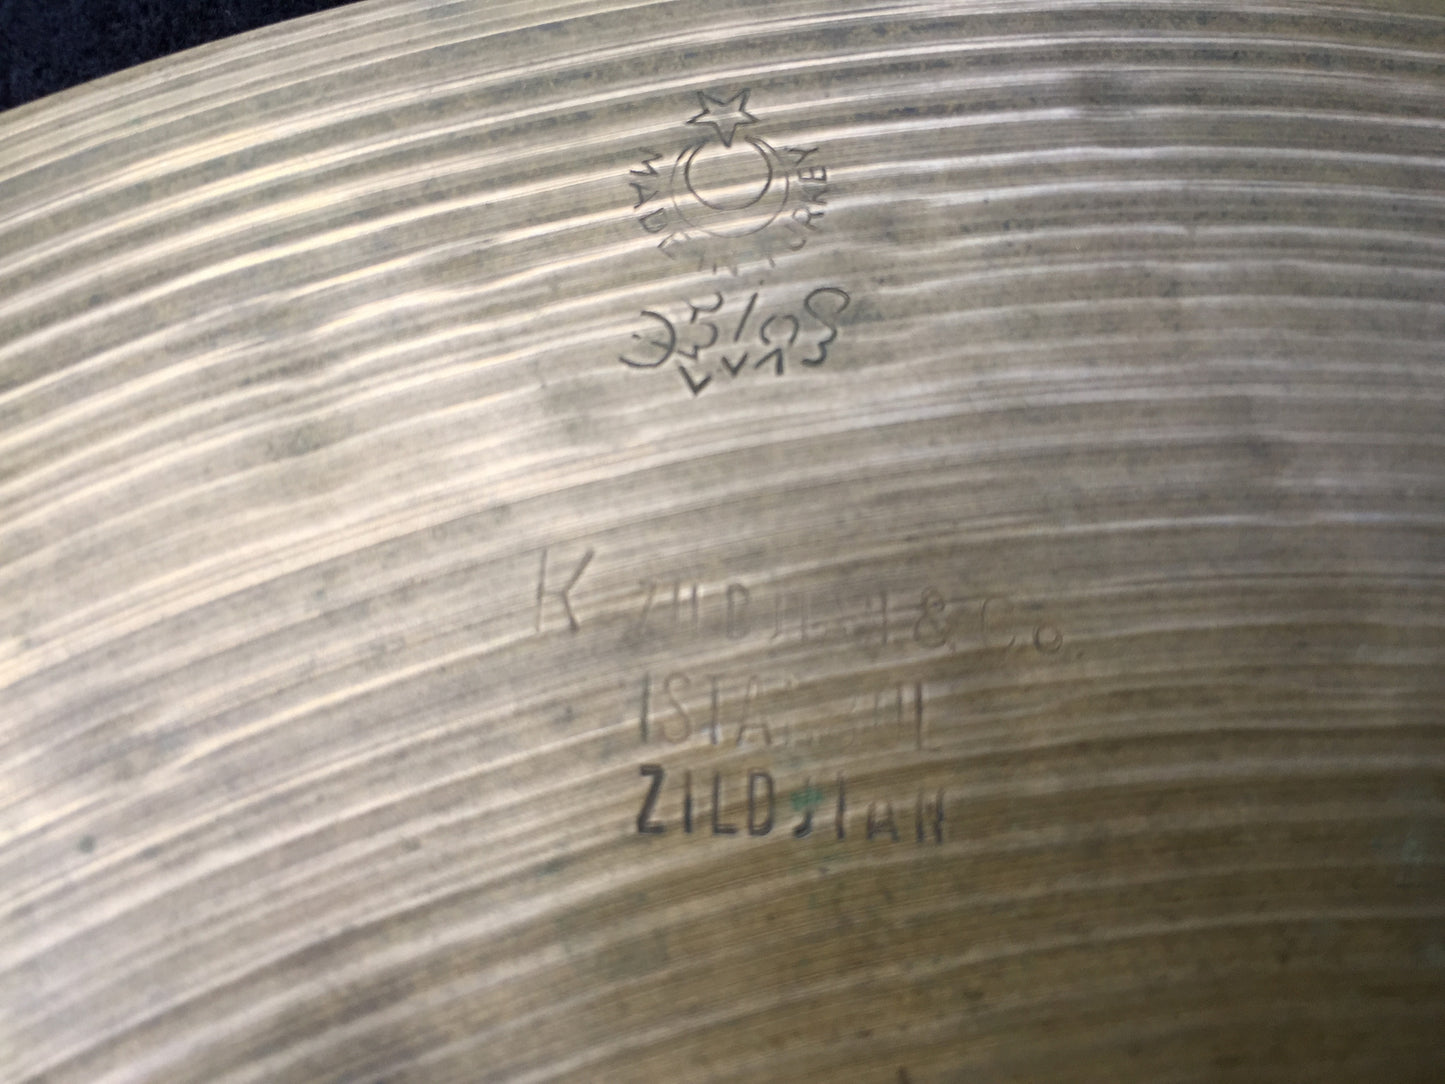 14" 1960's Zildjian K Istanbul Hand Hammered Hi-Hat Cymbals 796g / 970g - Inventory # 311